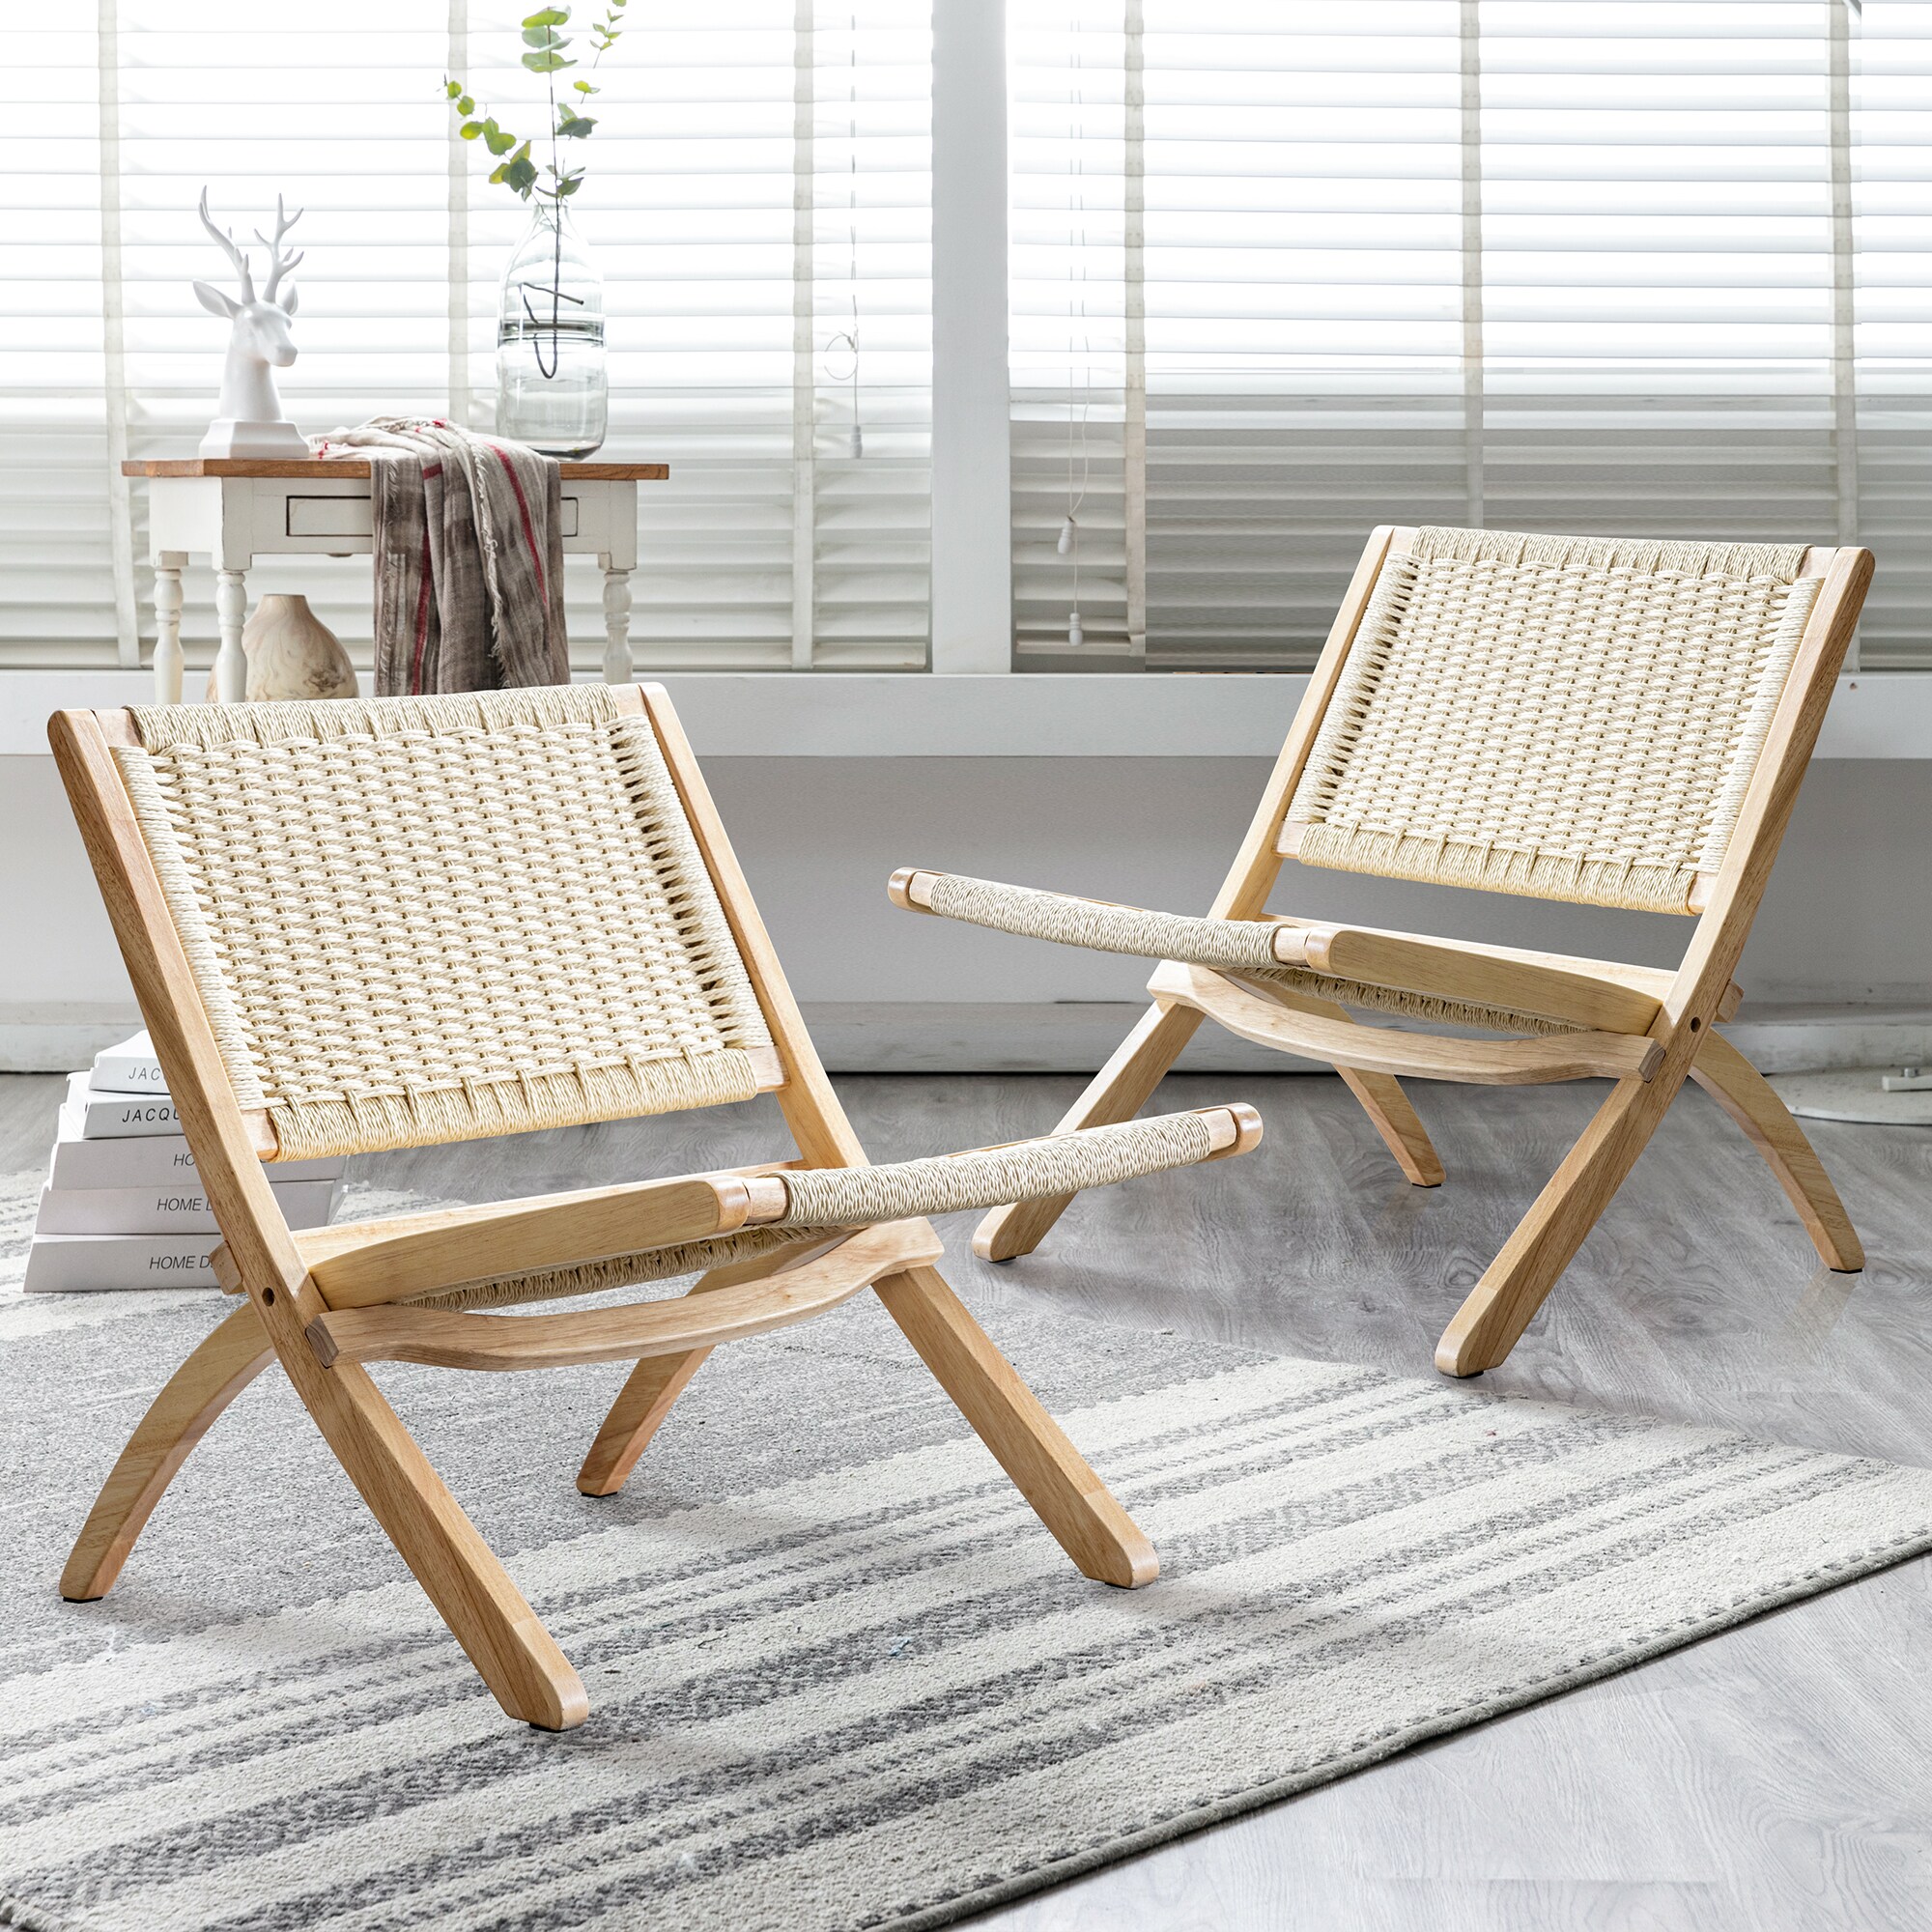 Bamboo Folding Chair / The Chiavari Chair Company